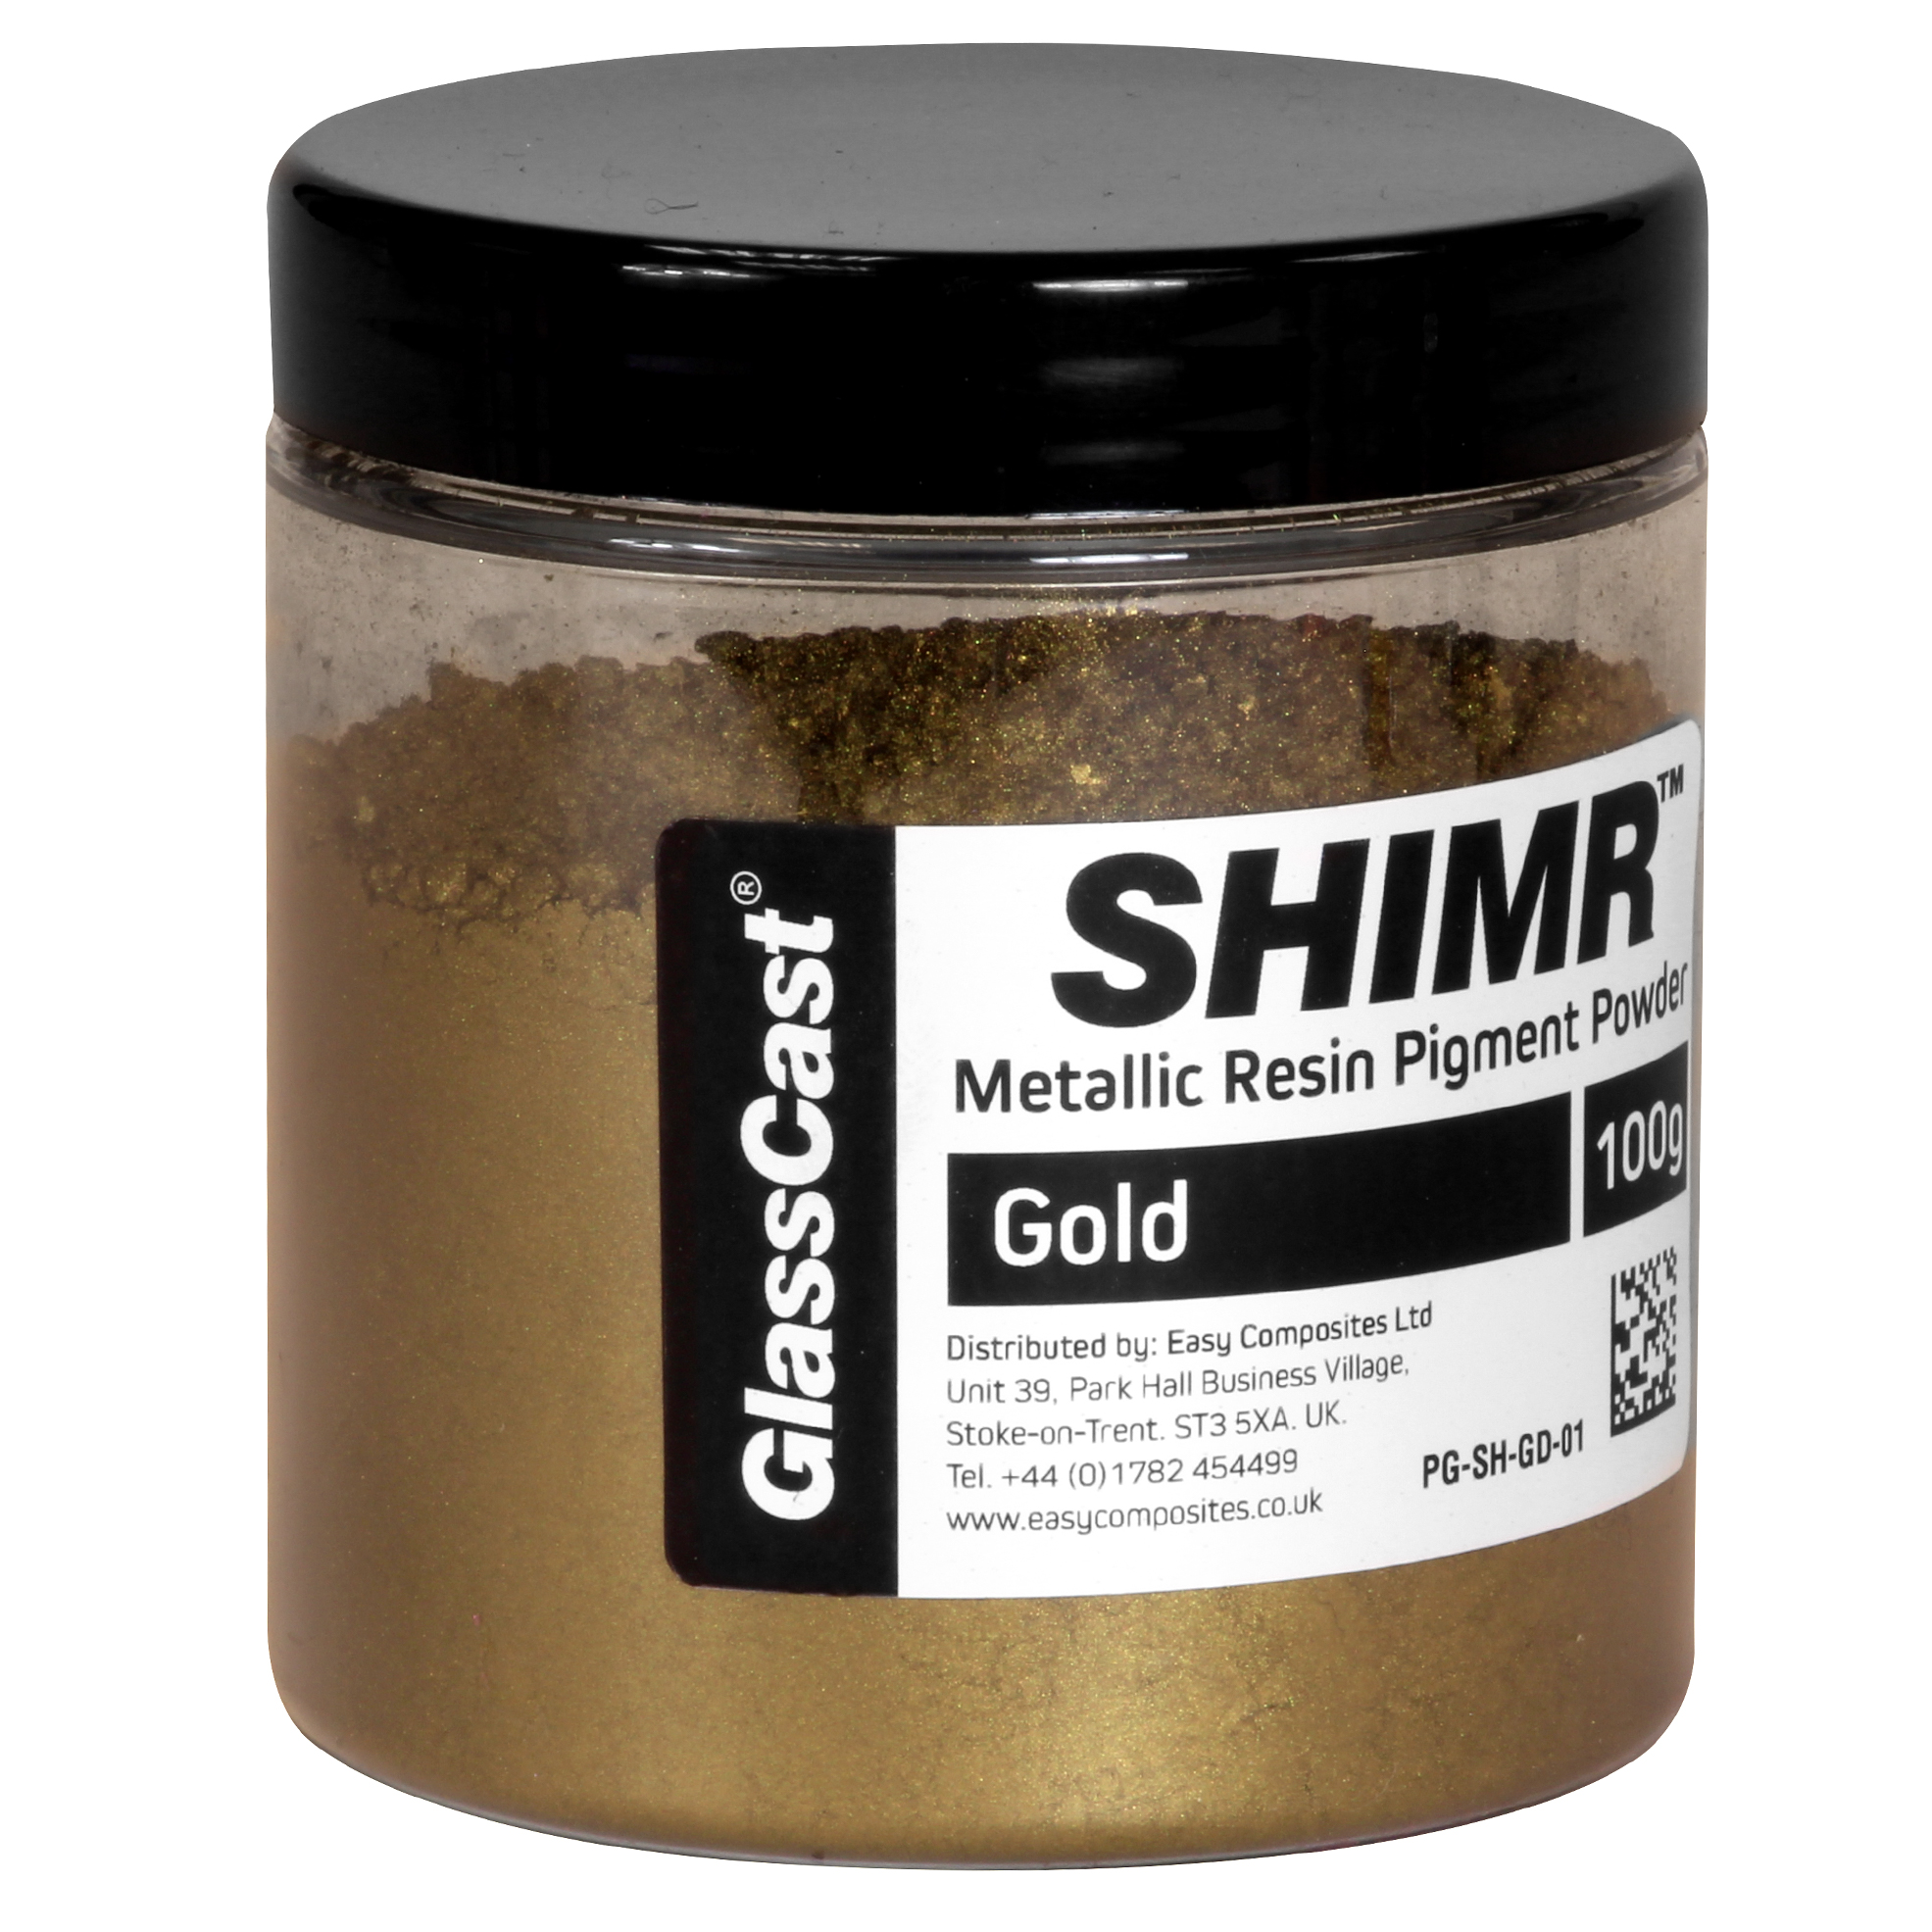 Gold SHIMR - Metallic Effect Pigment Powder for Epoxy Resin - GlassCast